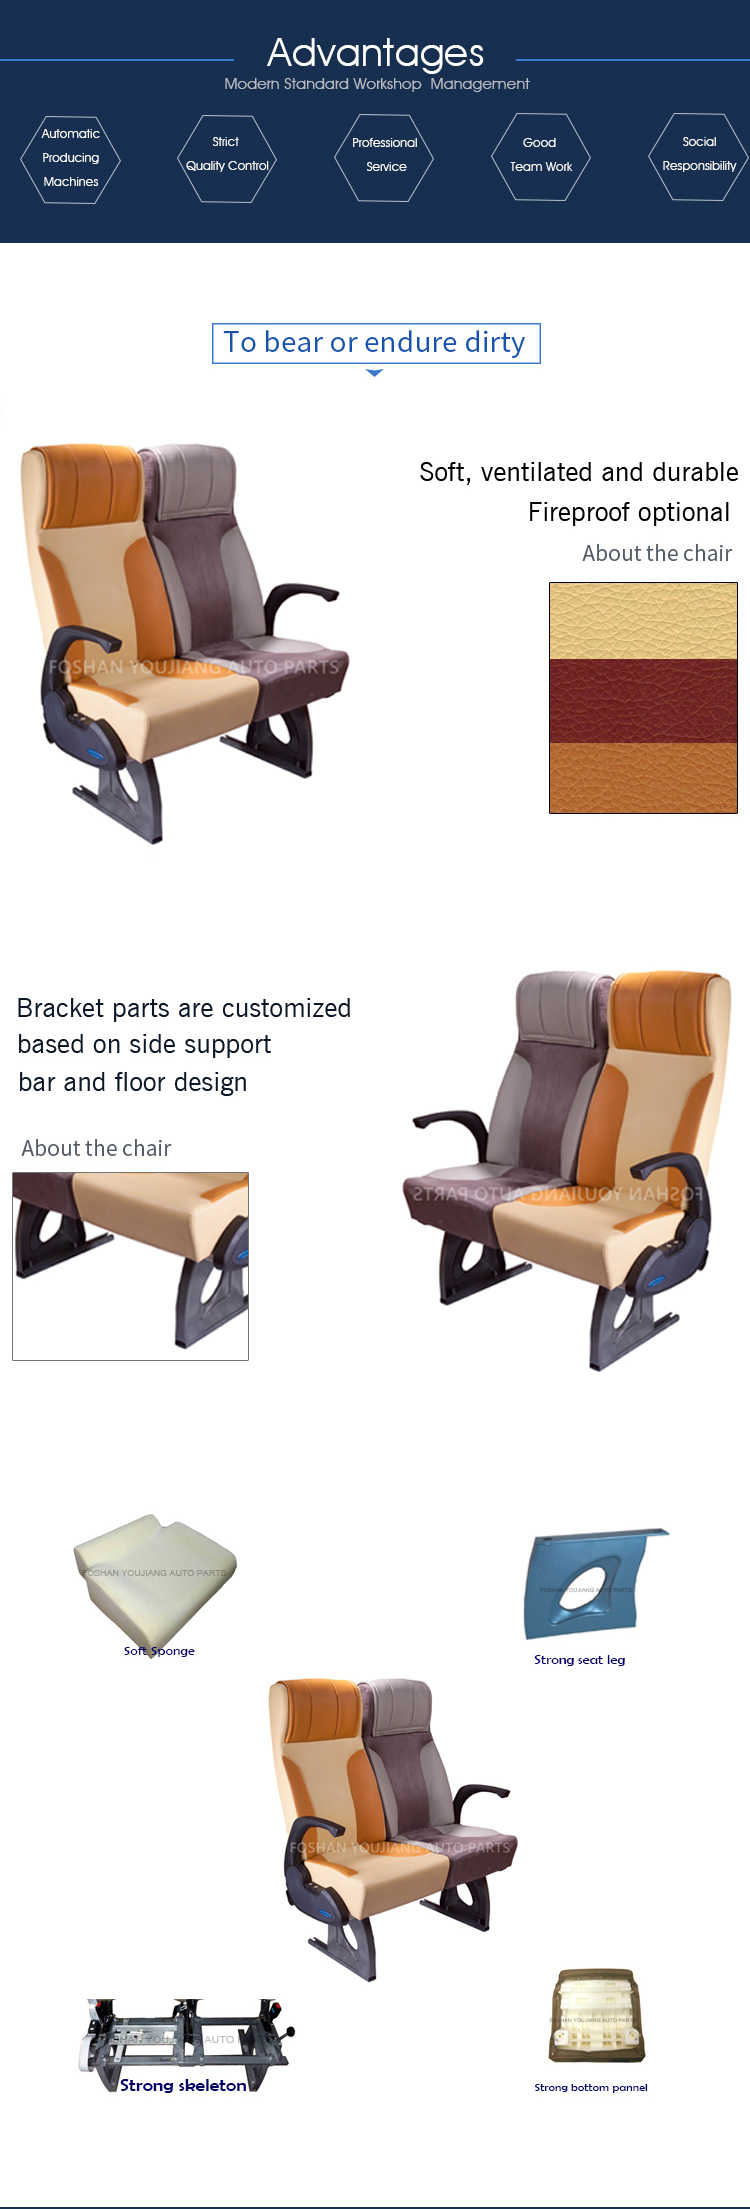 leather or fabric luxury folding bus seats